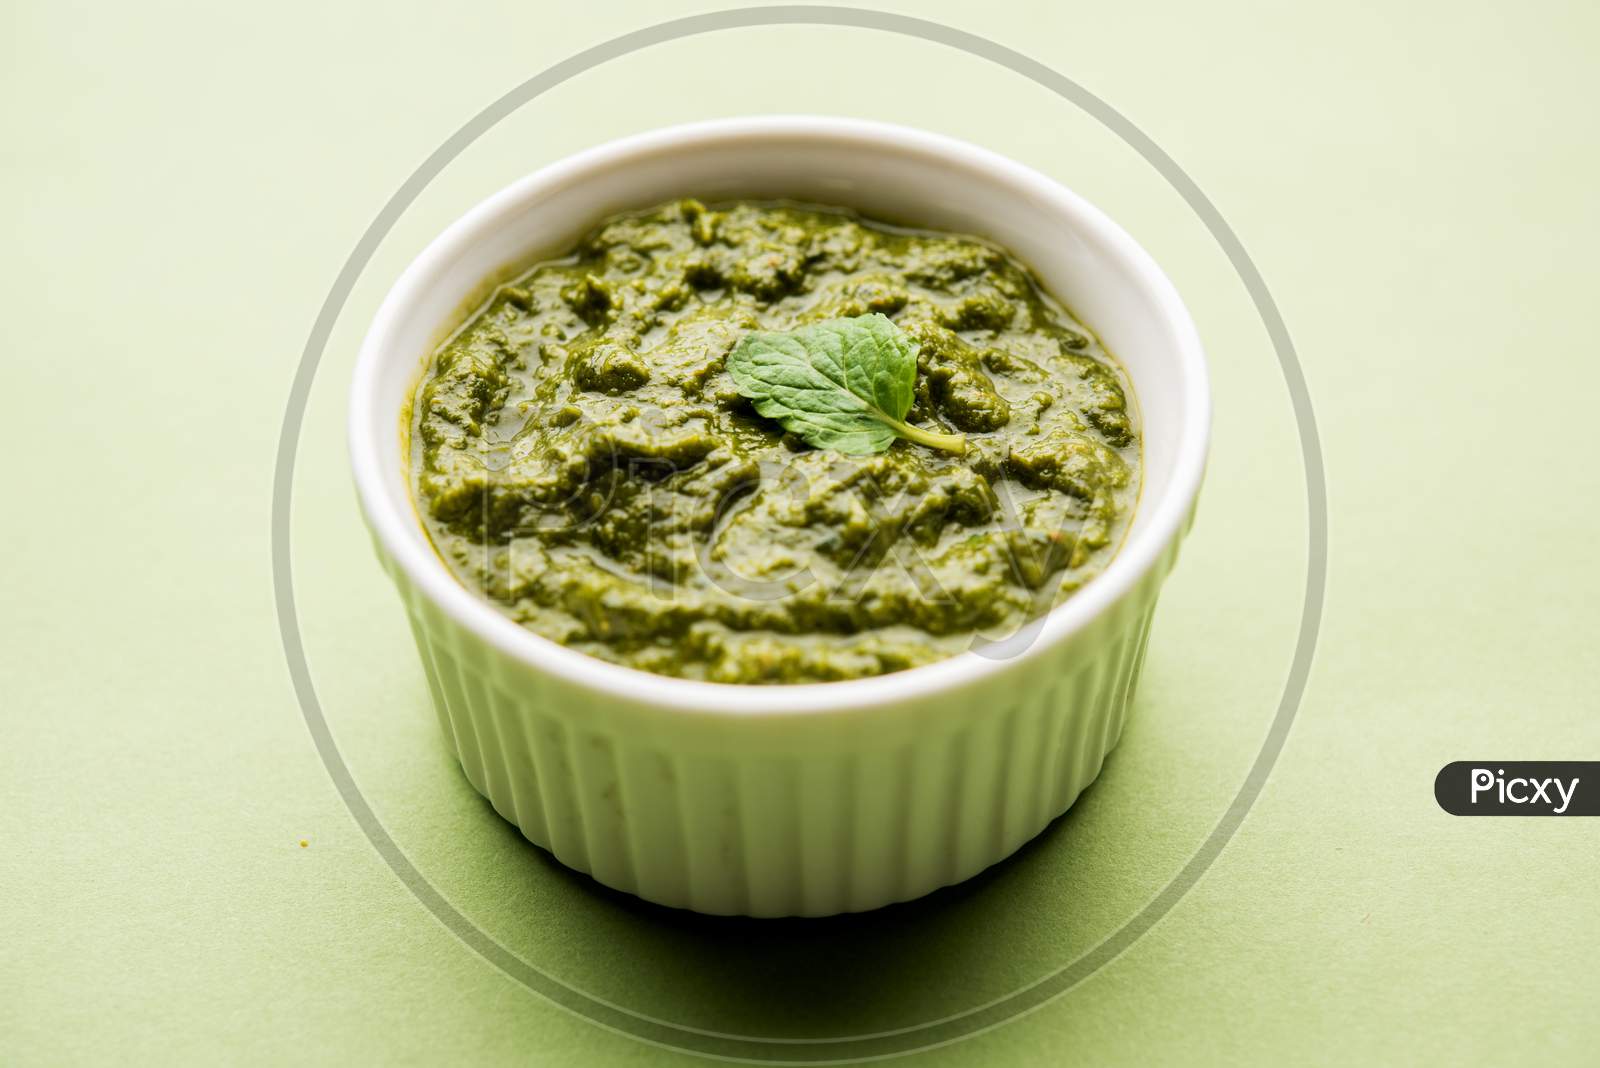 Green Chutney or Sauce made using coriandar or Mint